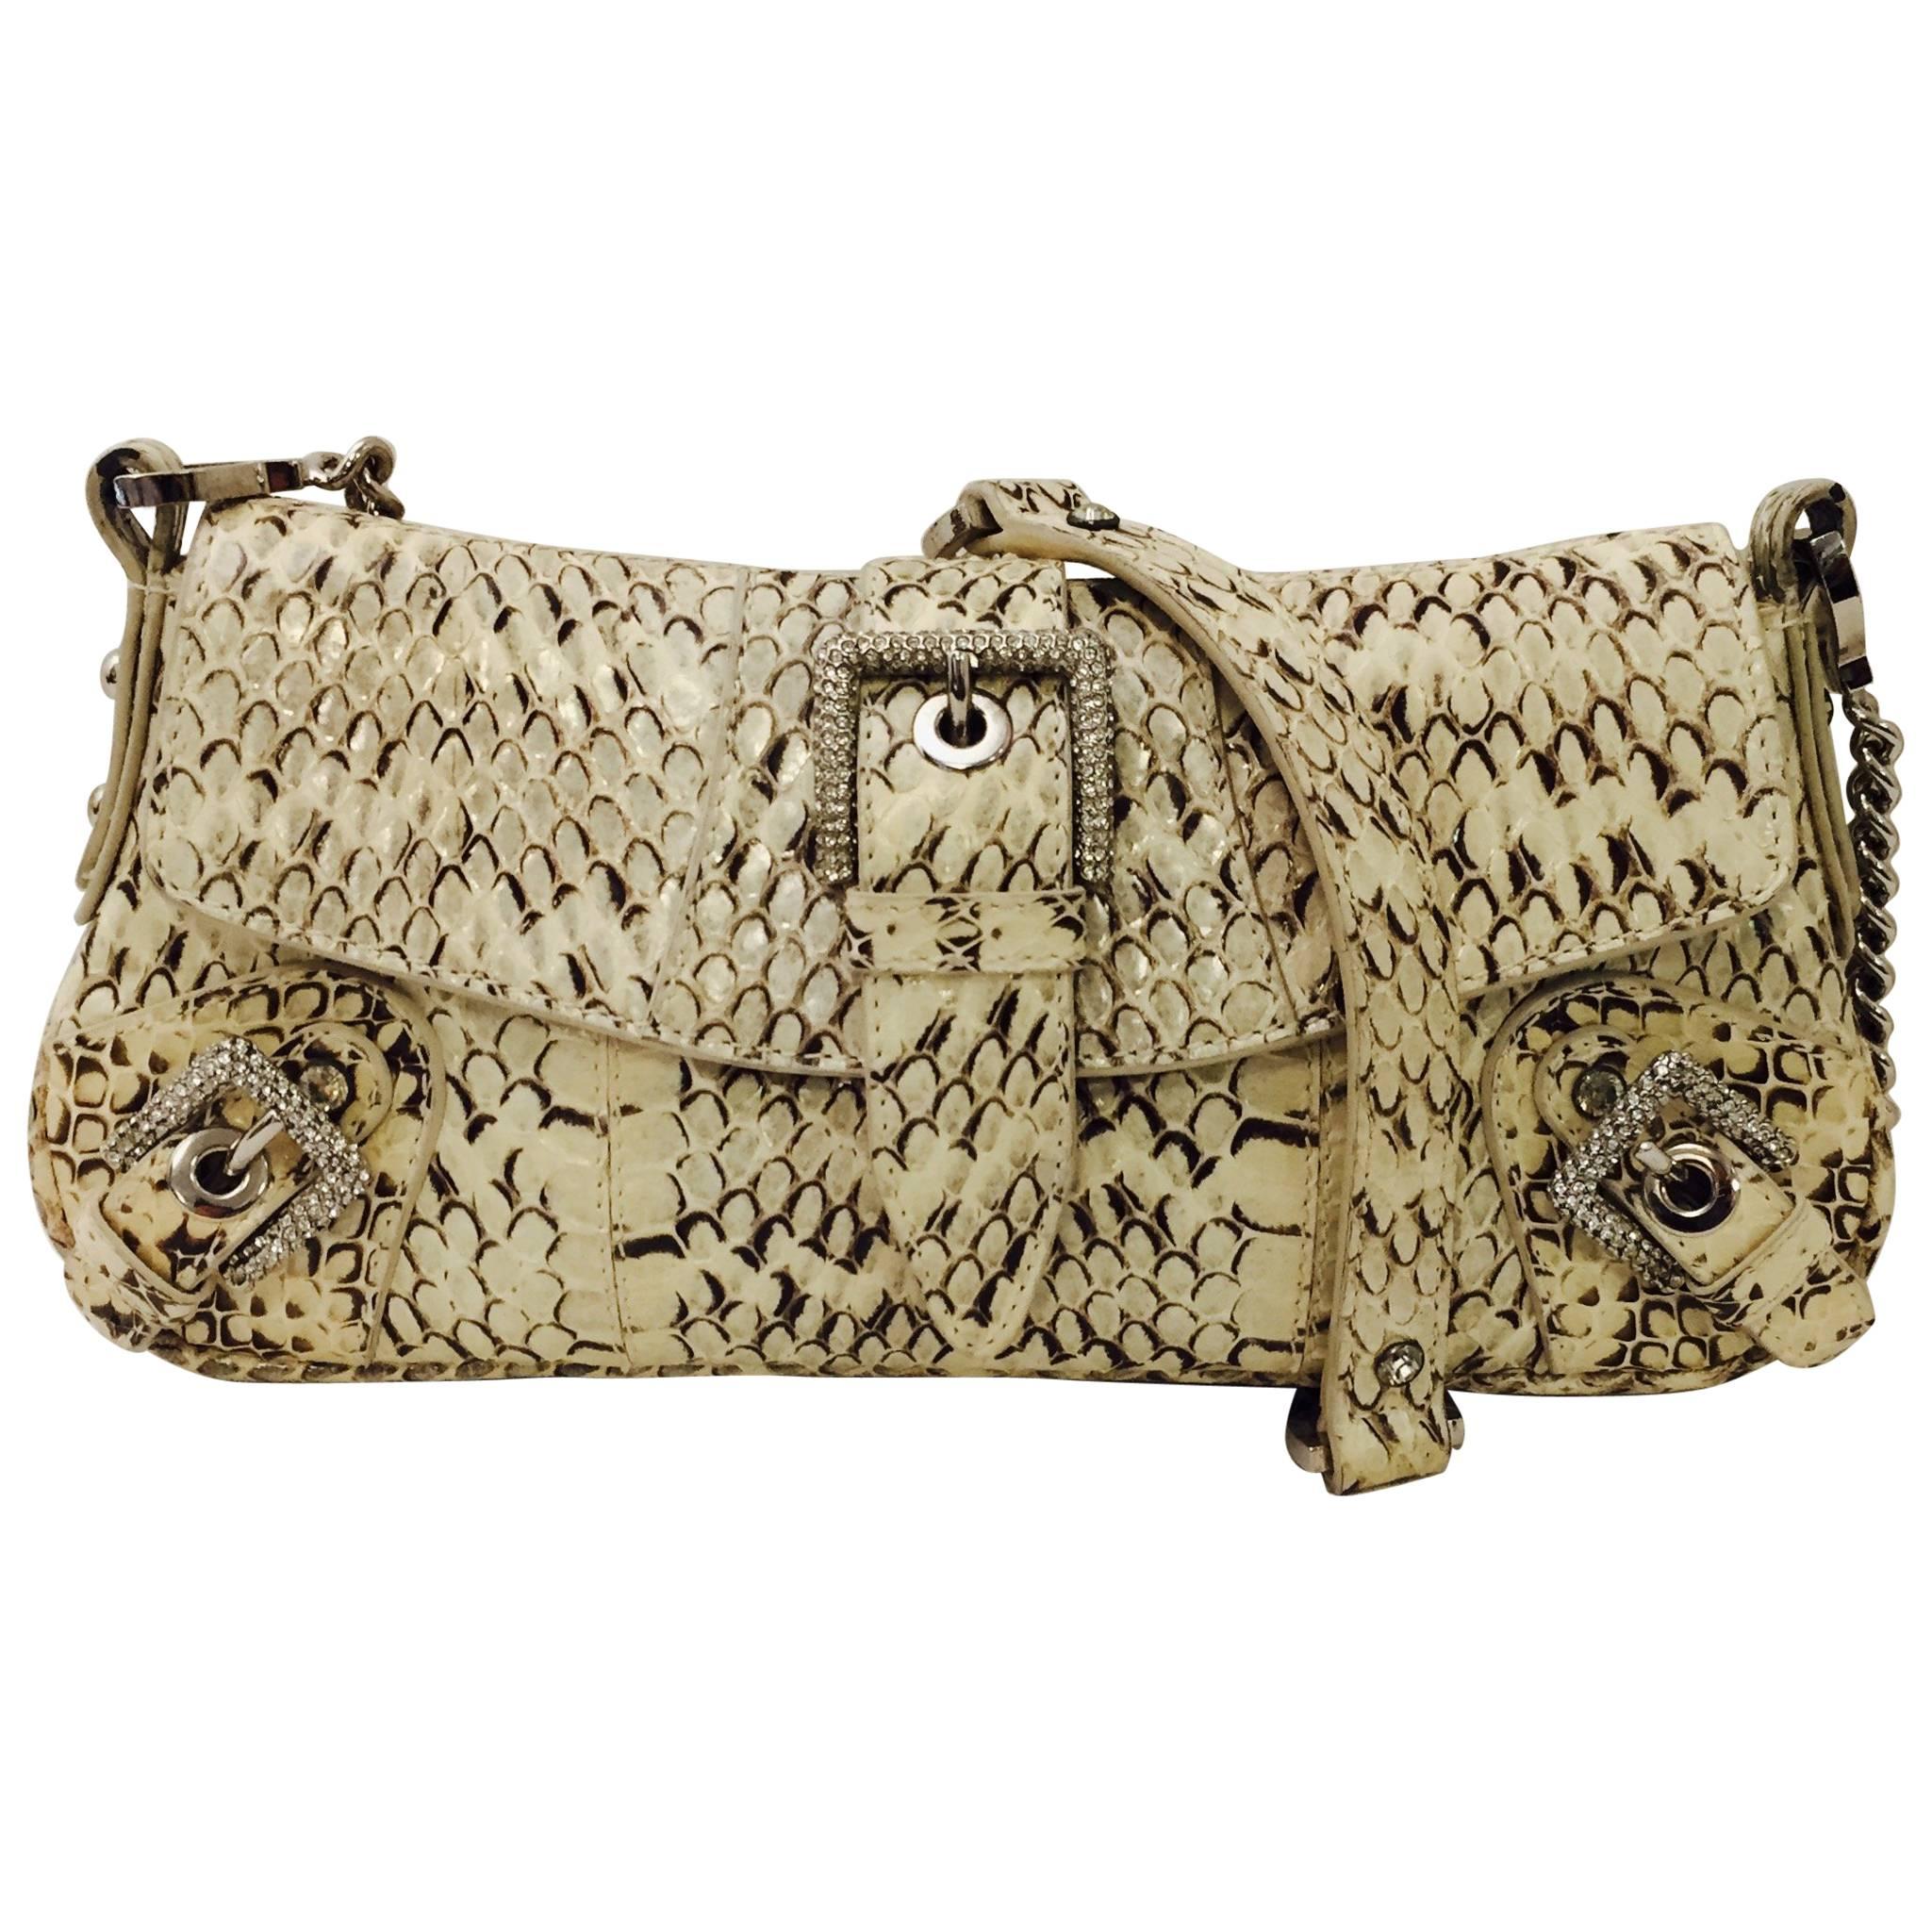 Dazzling Dolce & Gabbana Ivory & Brown Python Shoulder Bag with Crystals